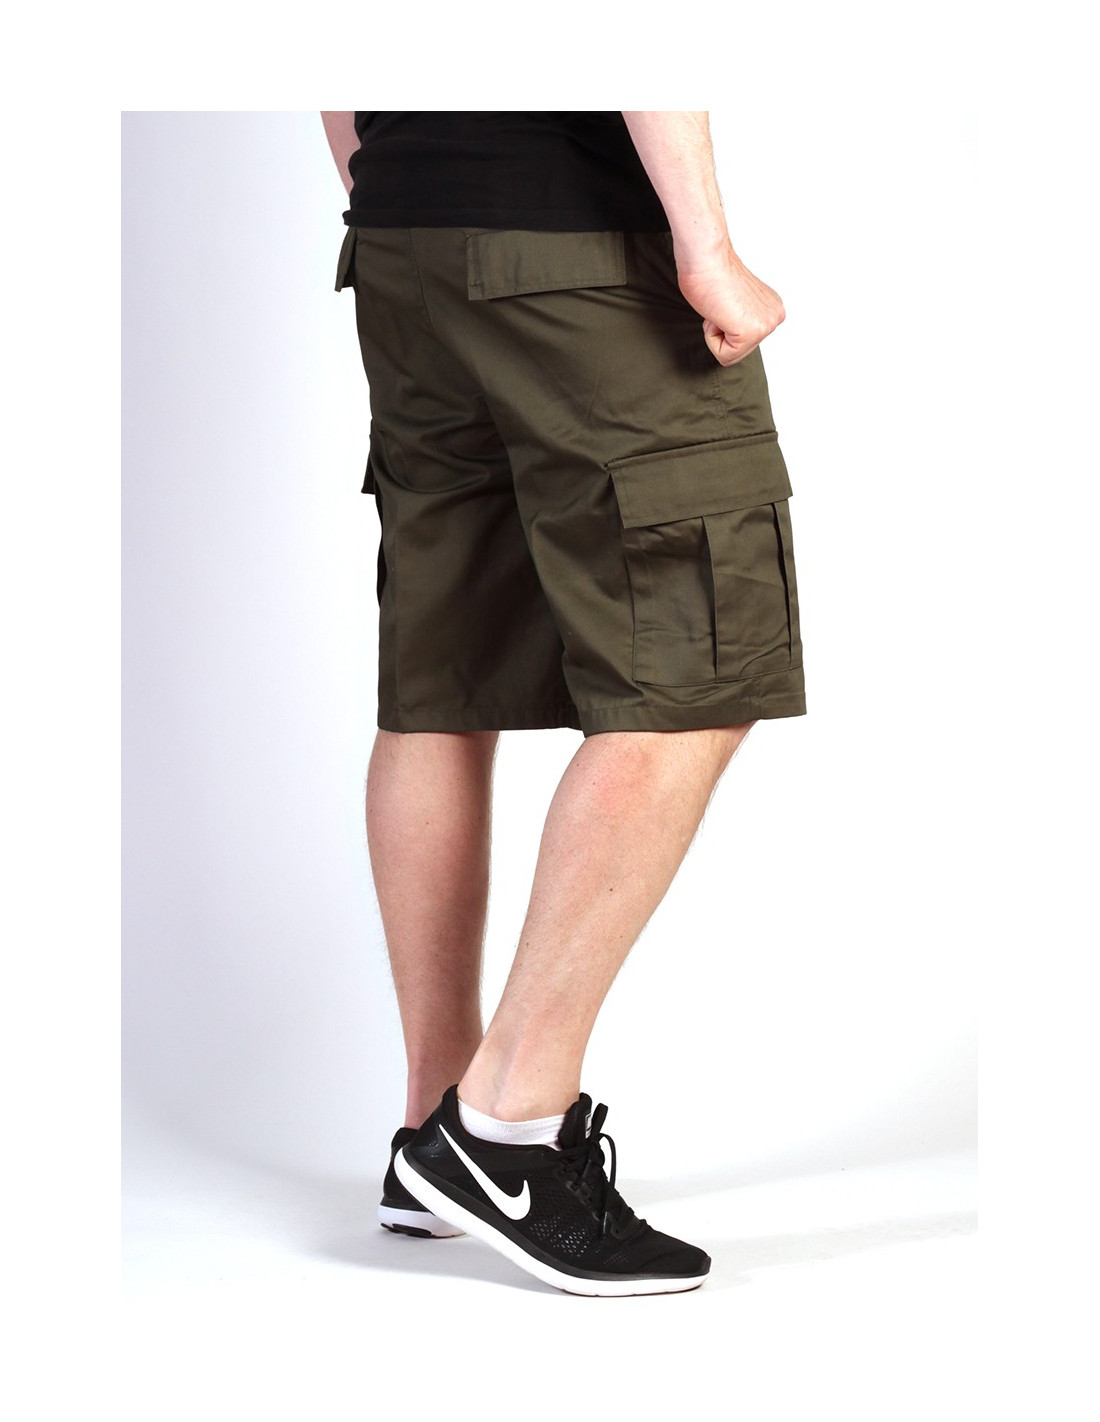 Cargo Shorts Olive by Tech Wear